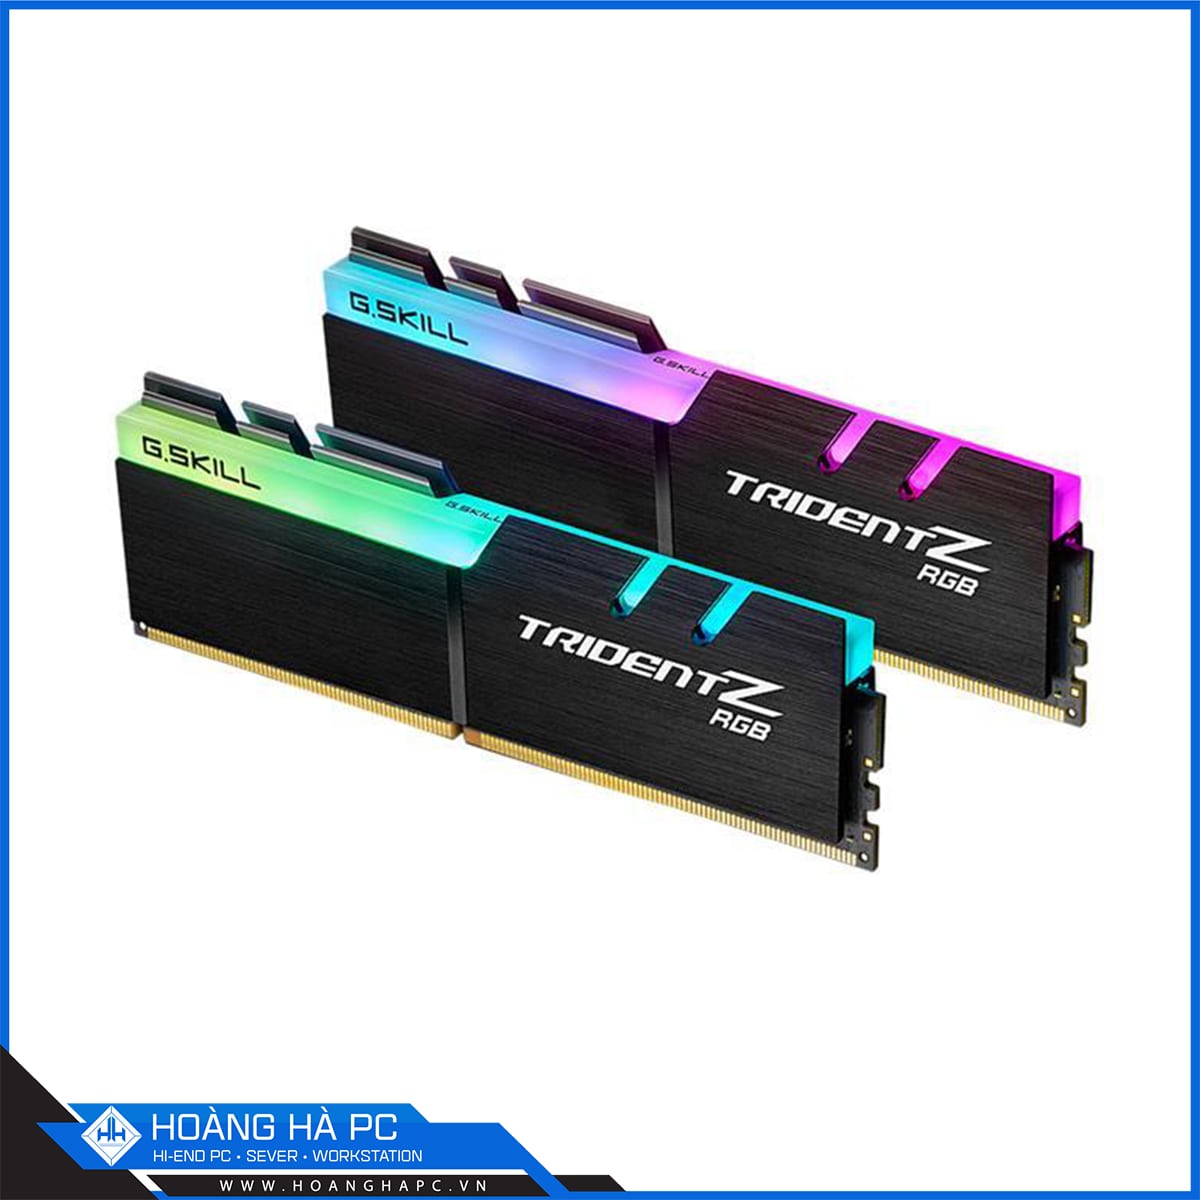 RAM GSkill DDR4 TRIDENT Z RGB 16GB (2x8GB) DDR4 3200GHz (F4-3200C16D-16GTZR)